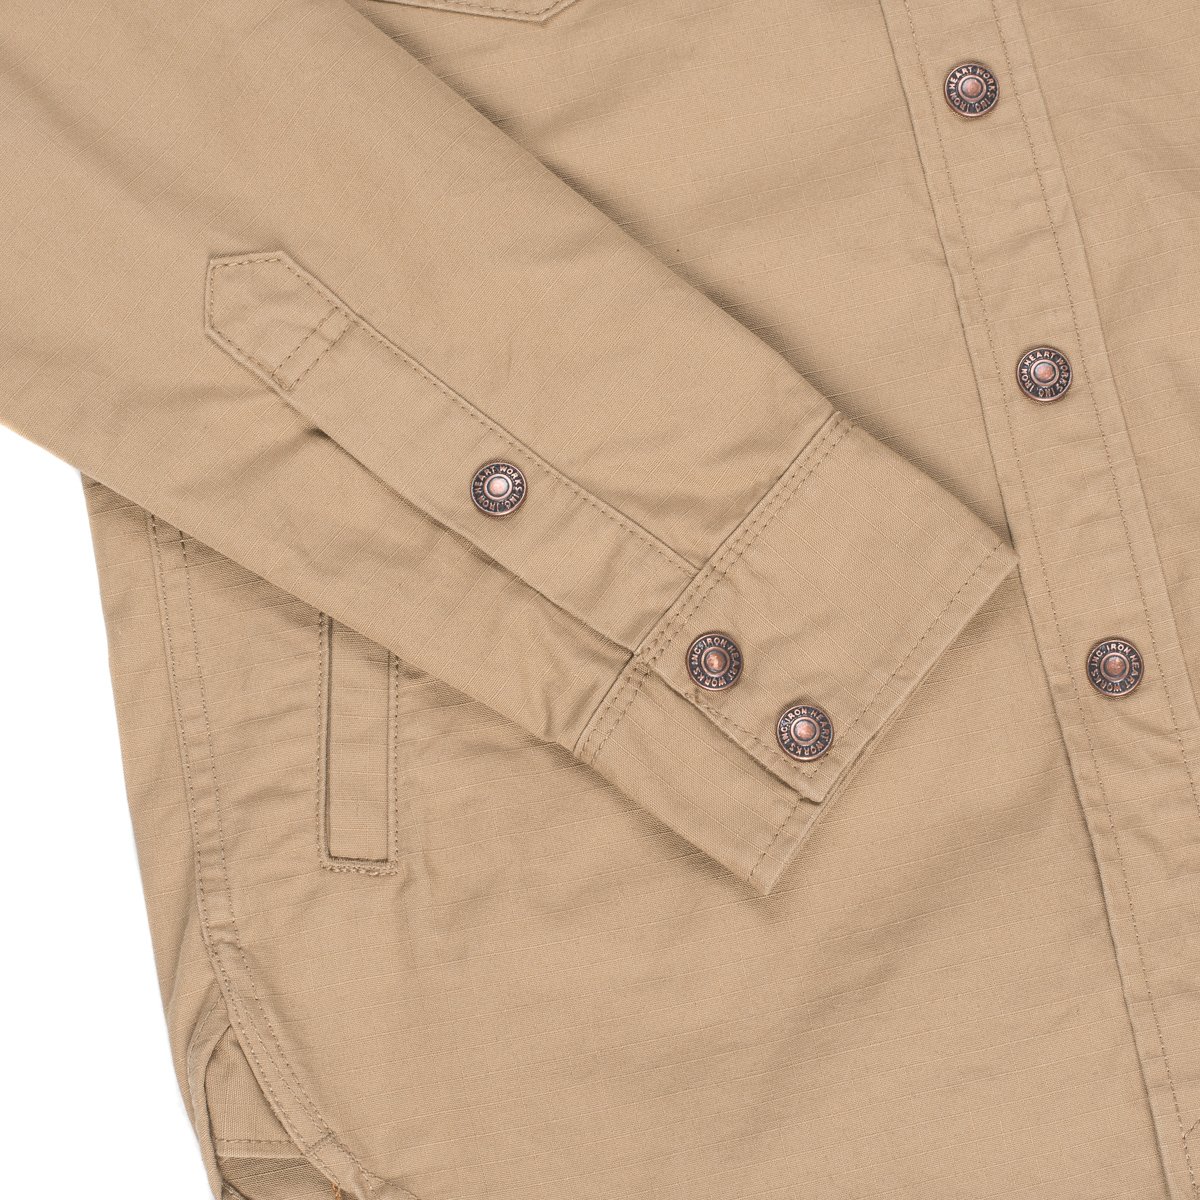 IHSH-187-KHA | Khaki Cotton Ripstop CPO Shirt